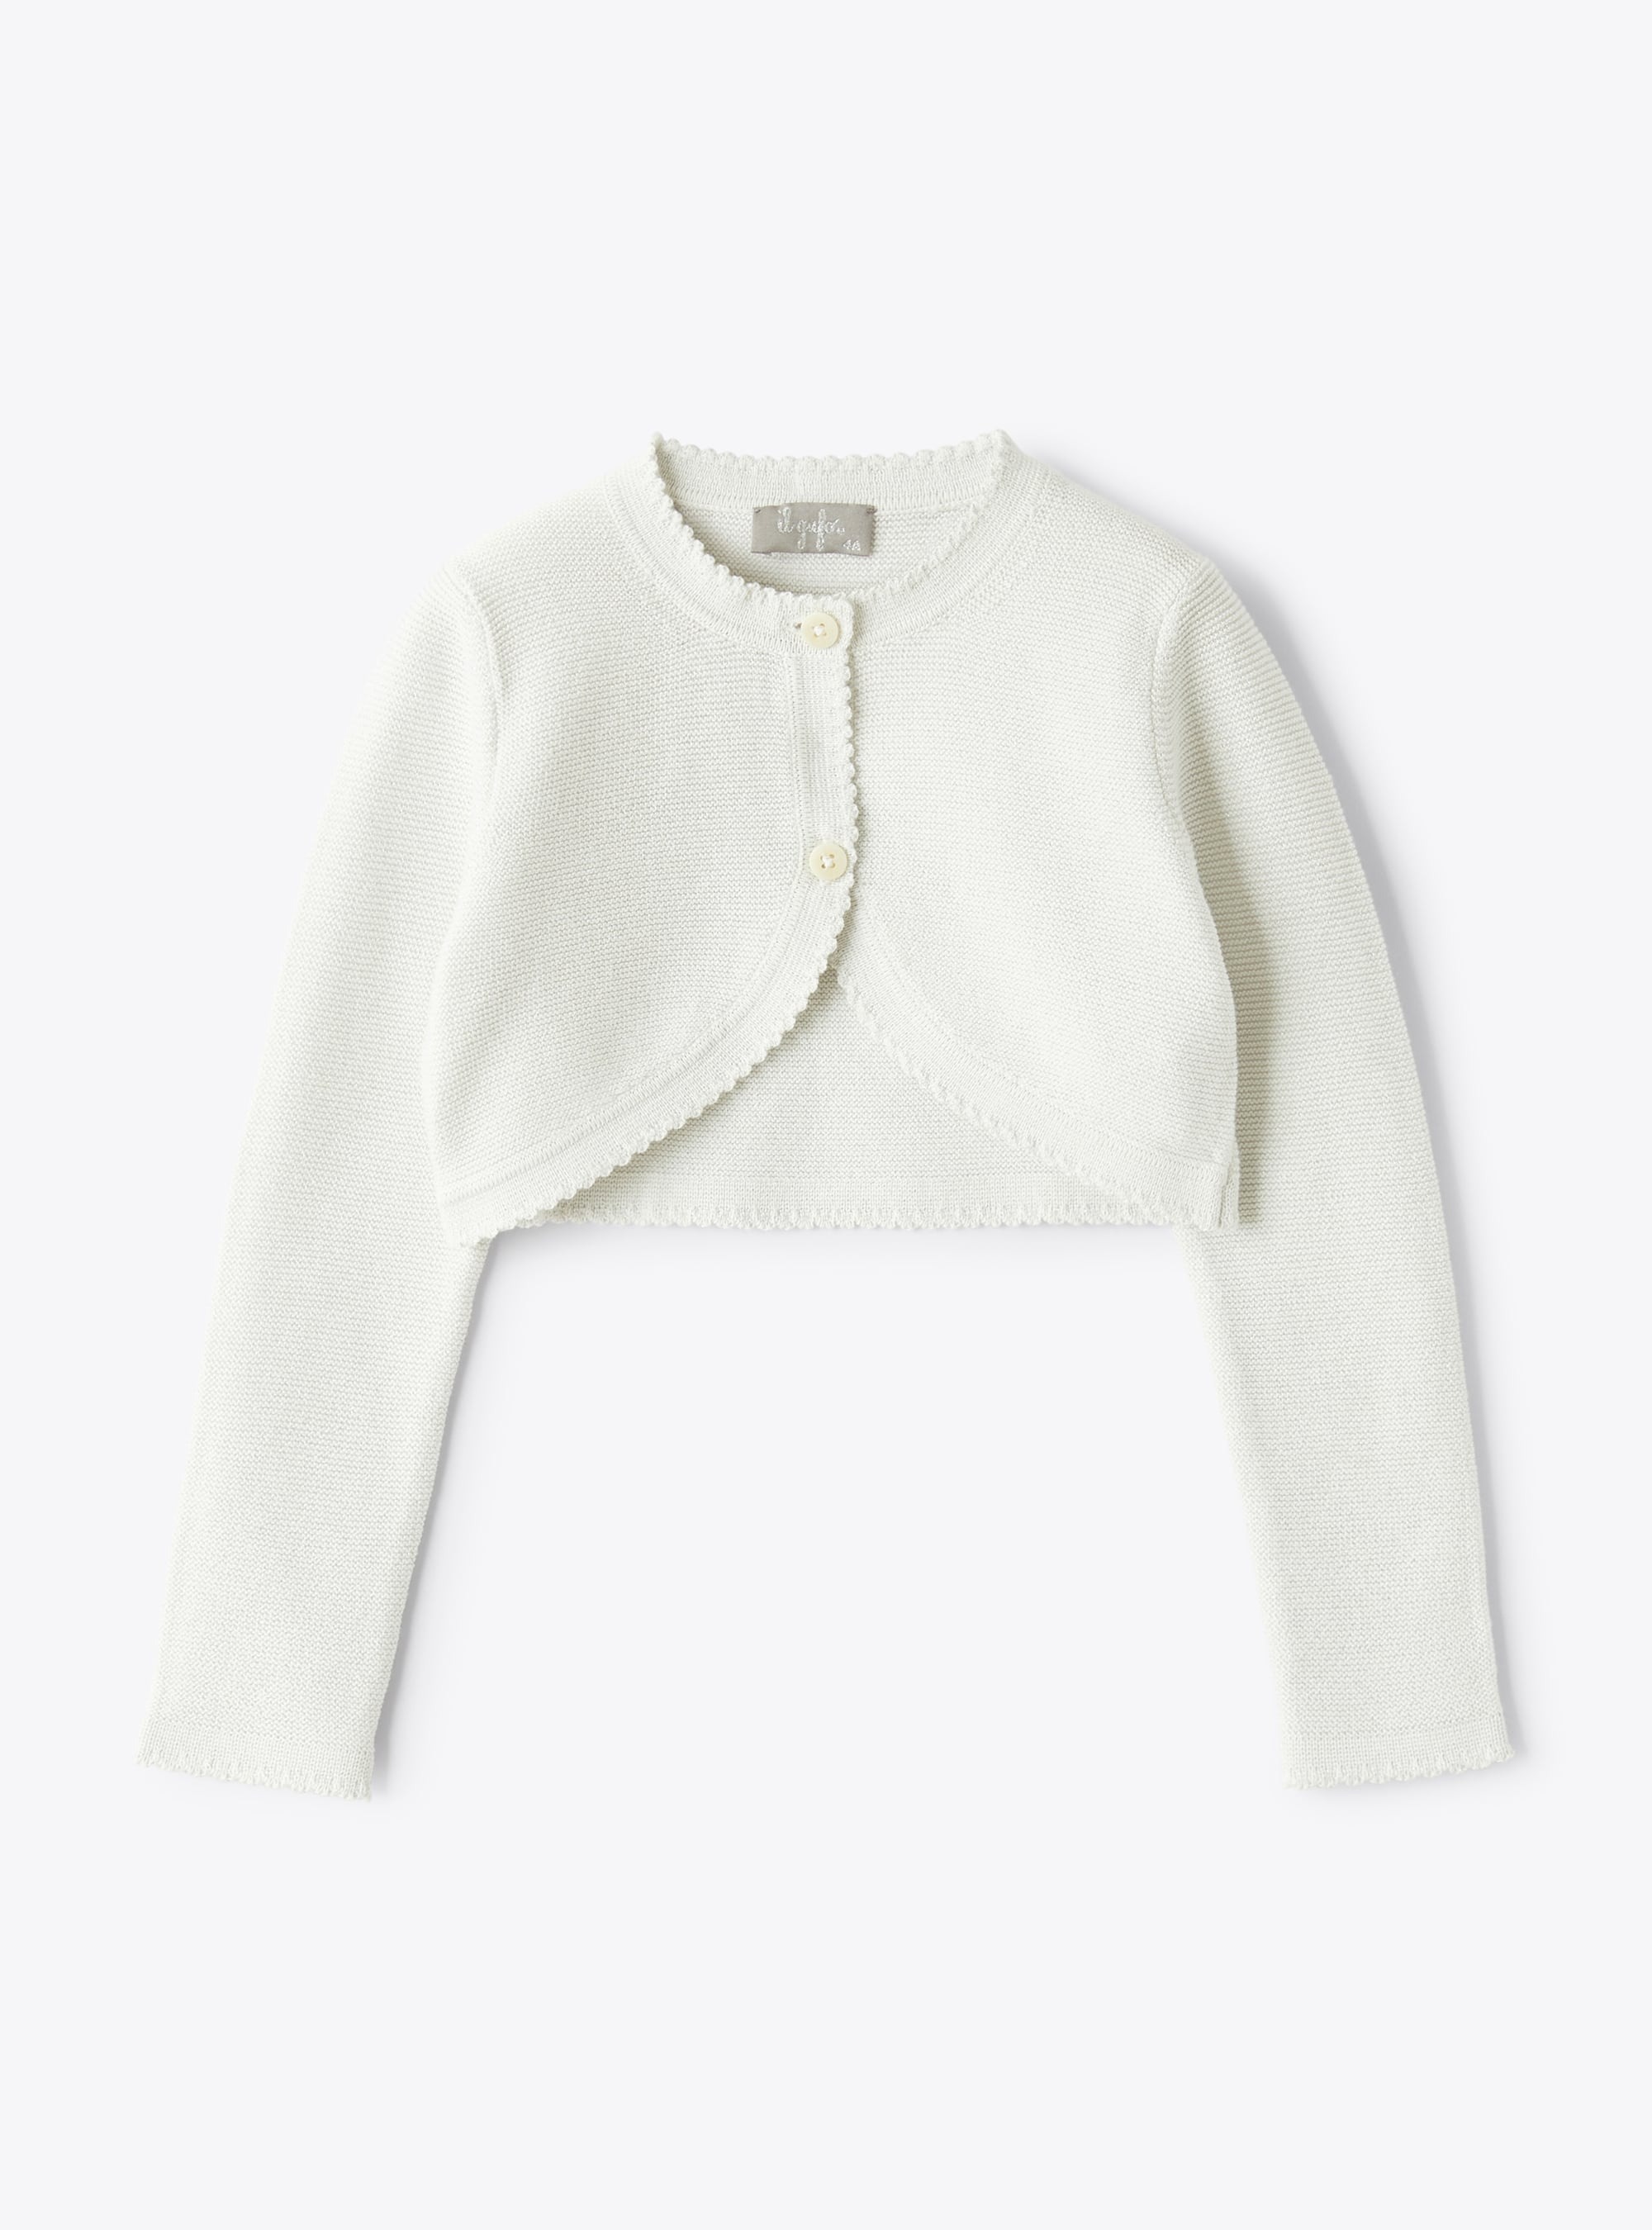 Tricot-knit cardigan in organic white cotton with lurex - White | Il Gufo